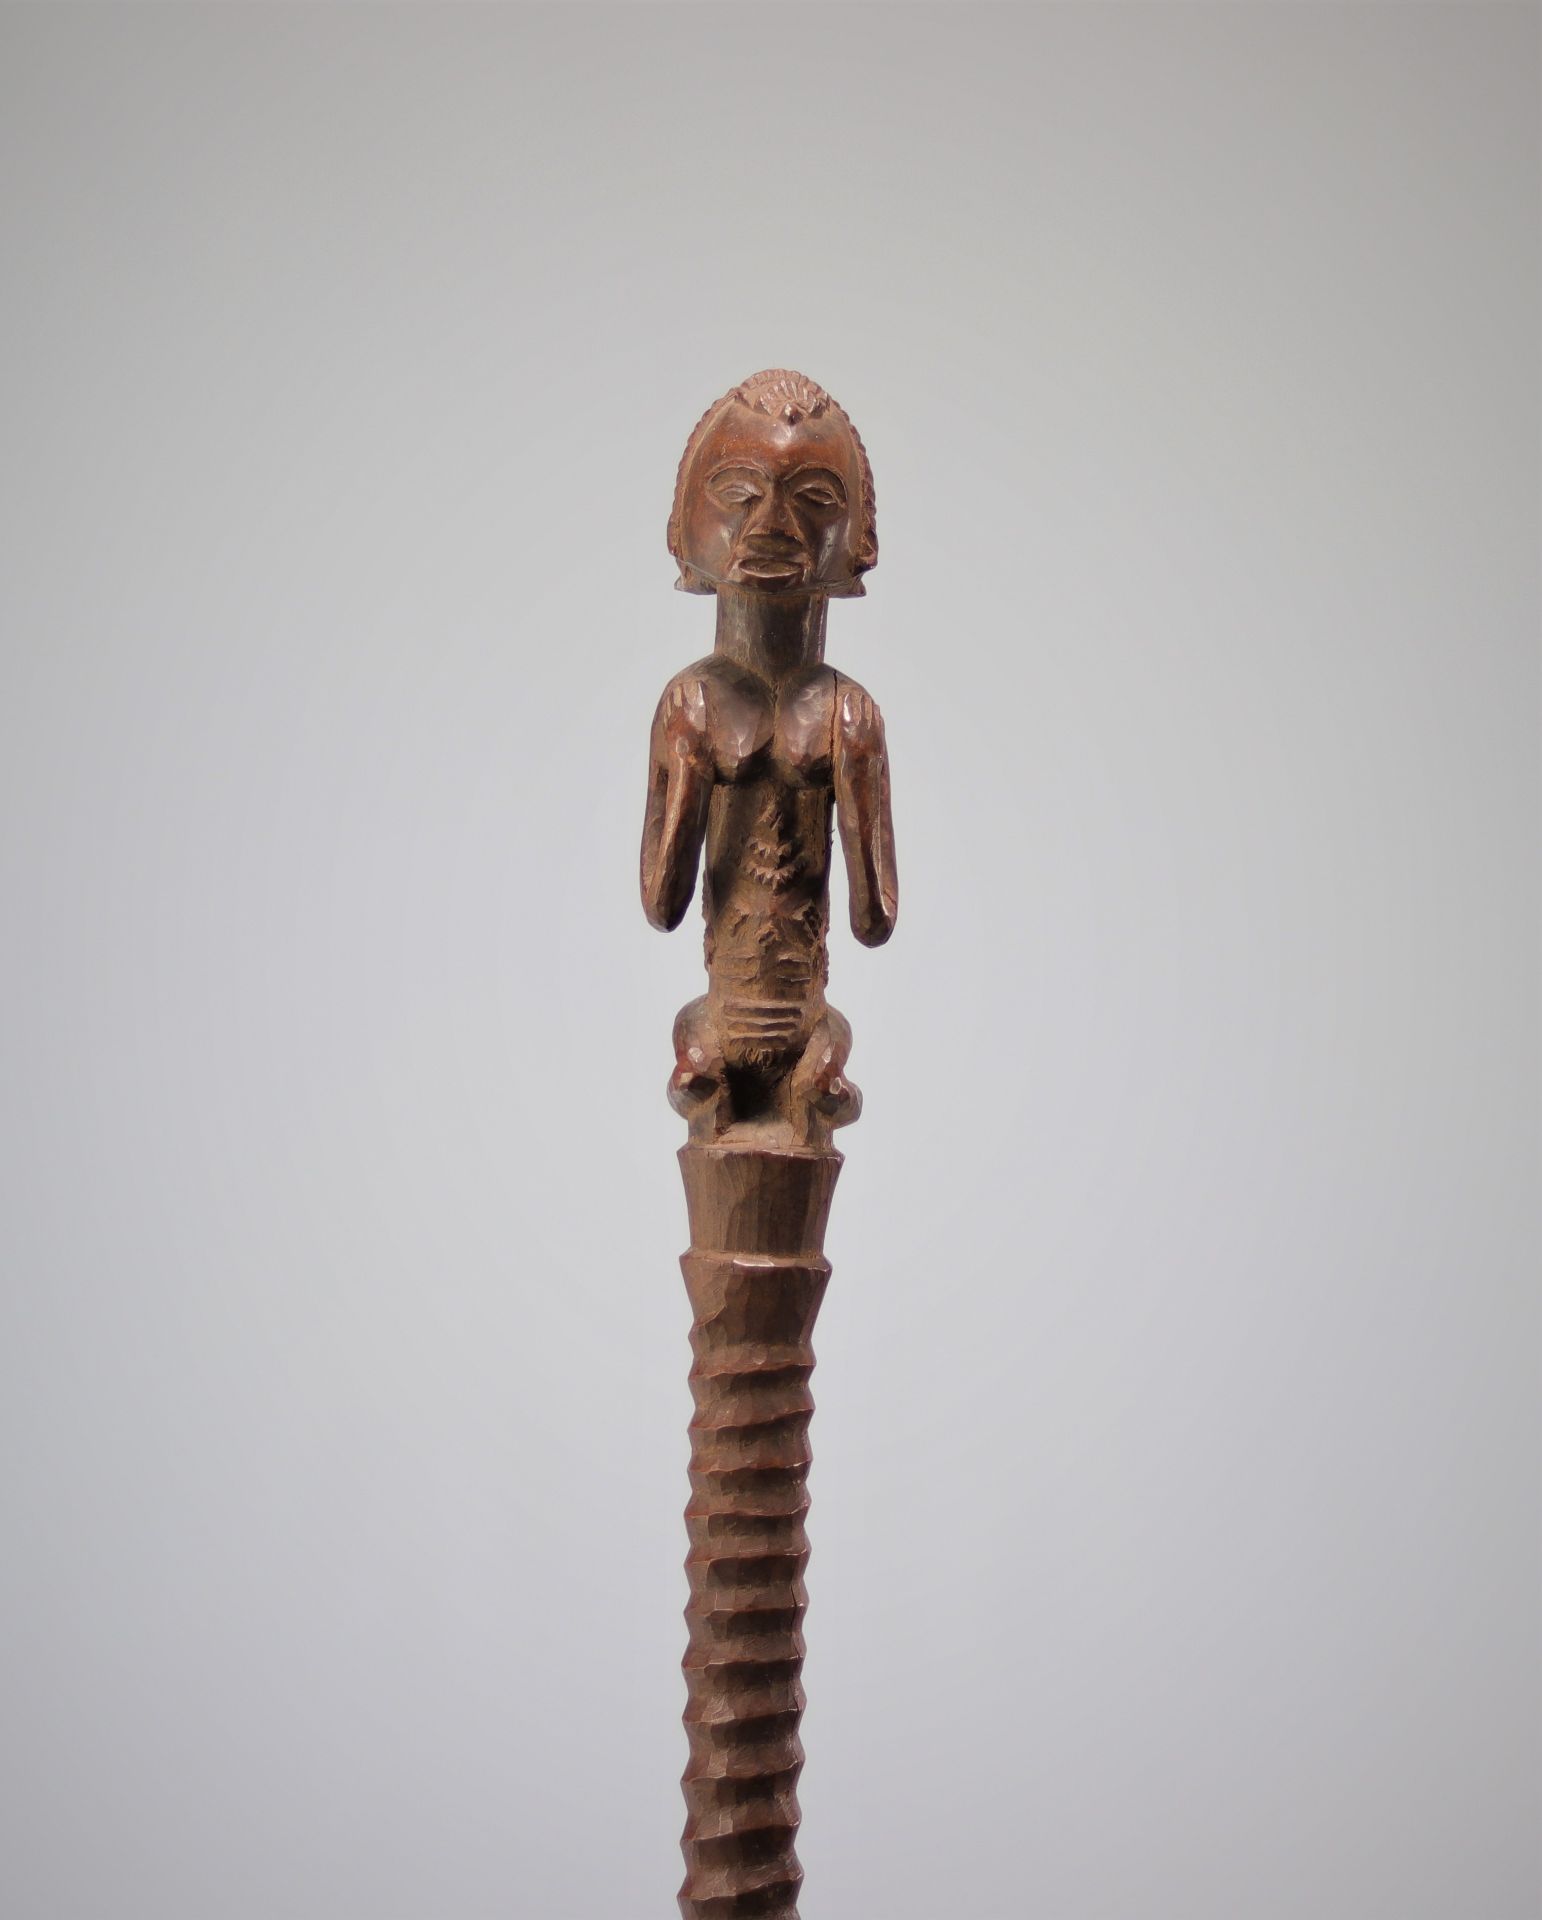 Luba Shankadi scepter surmounted by a figure - Image 3 of 6